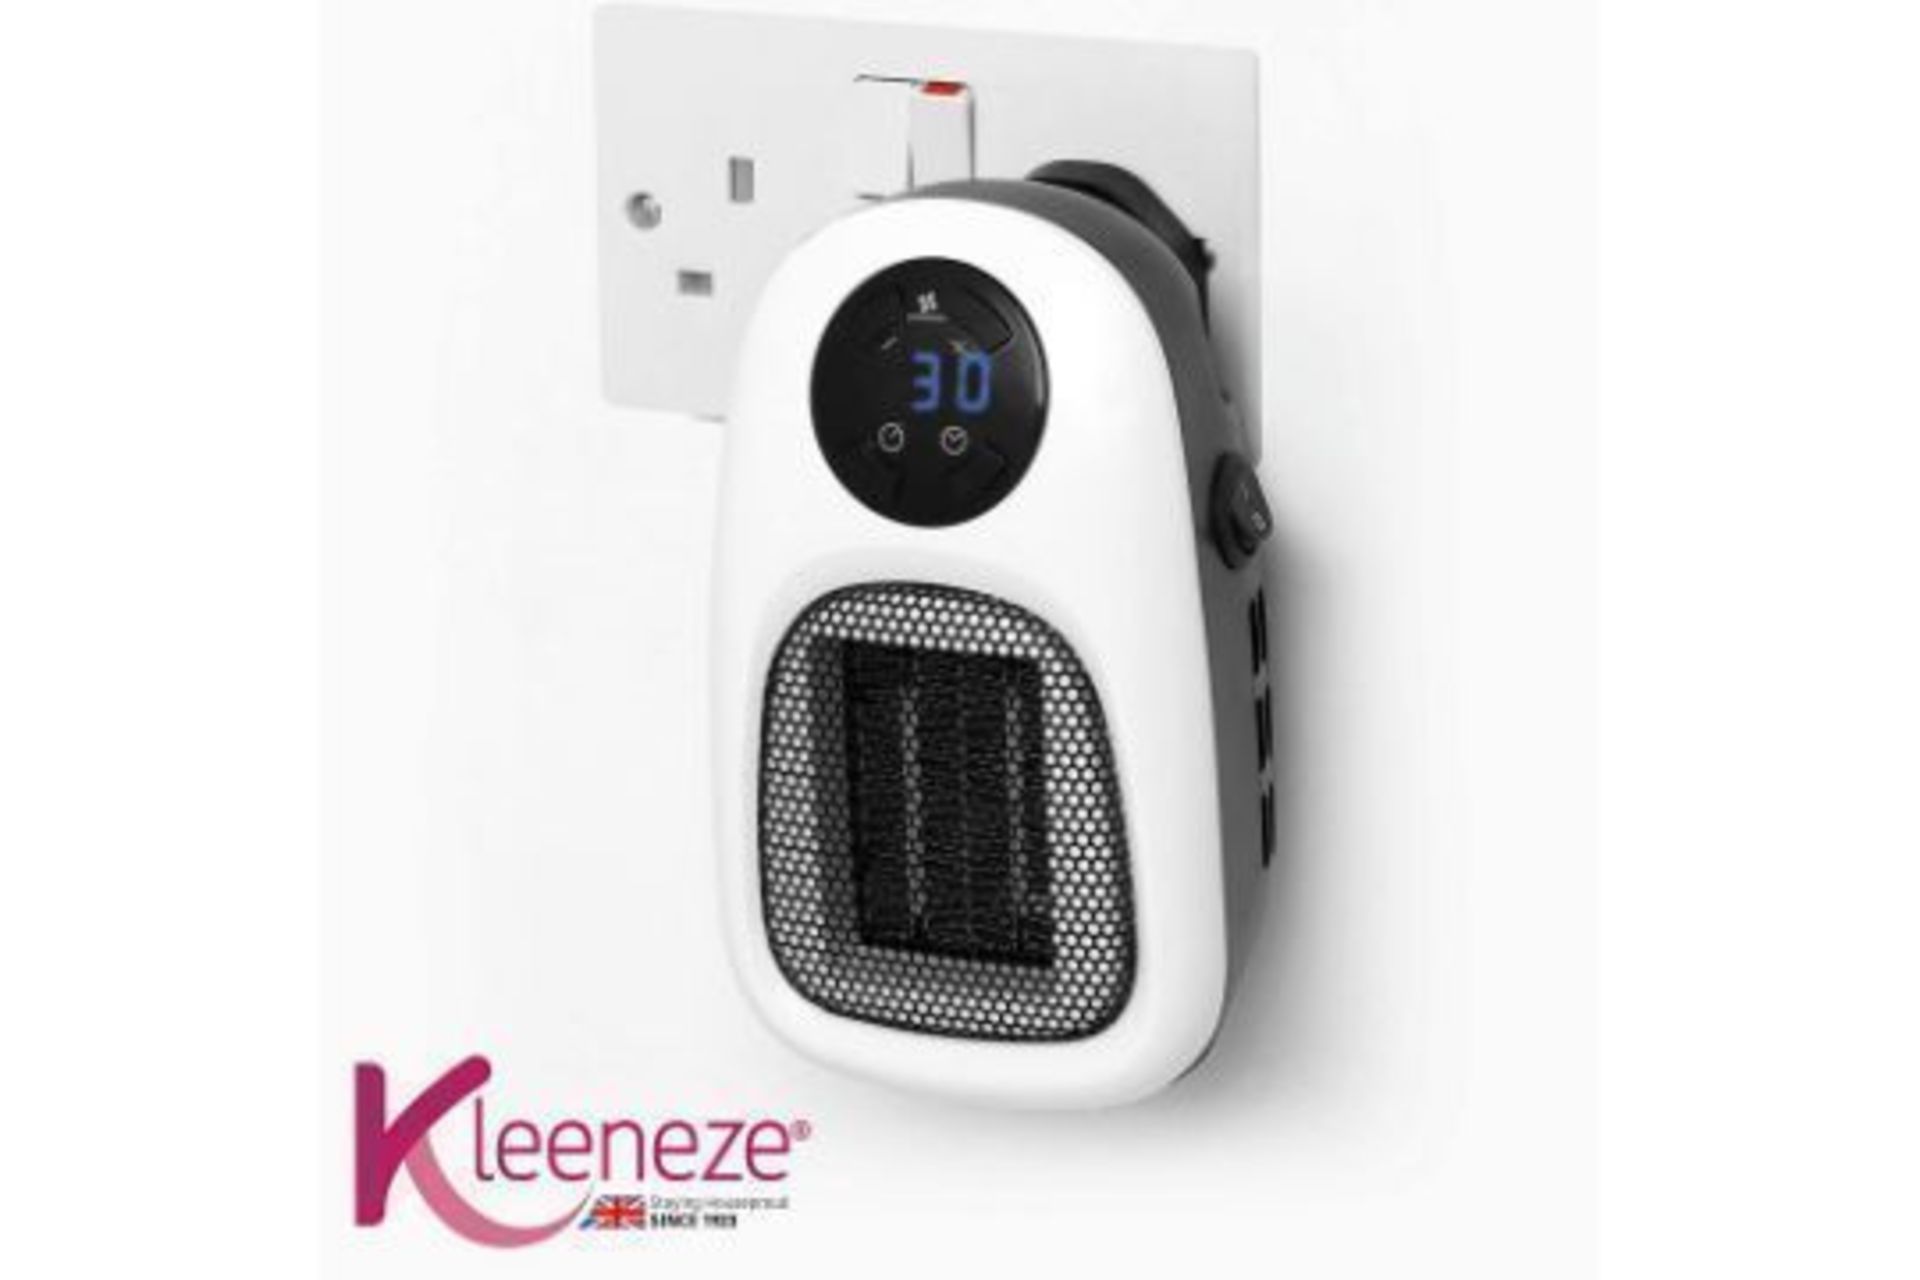 Brand New Kleeneze 500w Plug in Heater with LED Display, Timer, 90° Swivel Plug